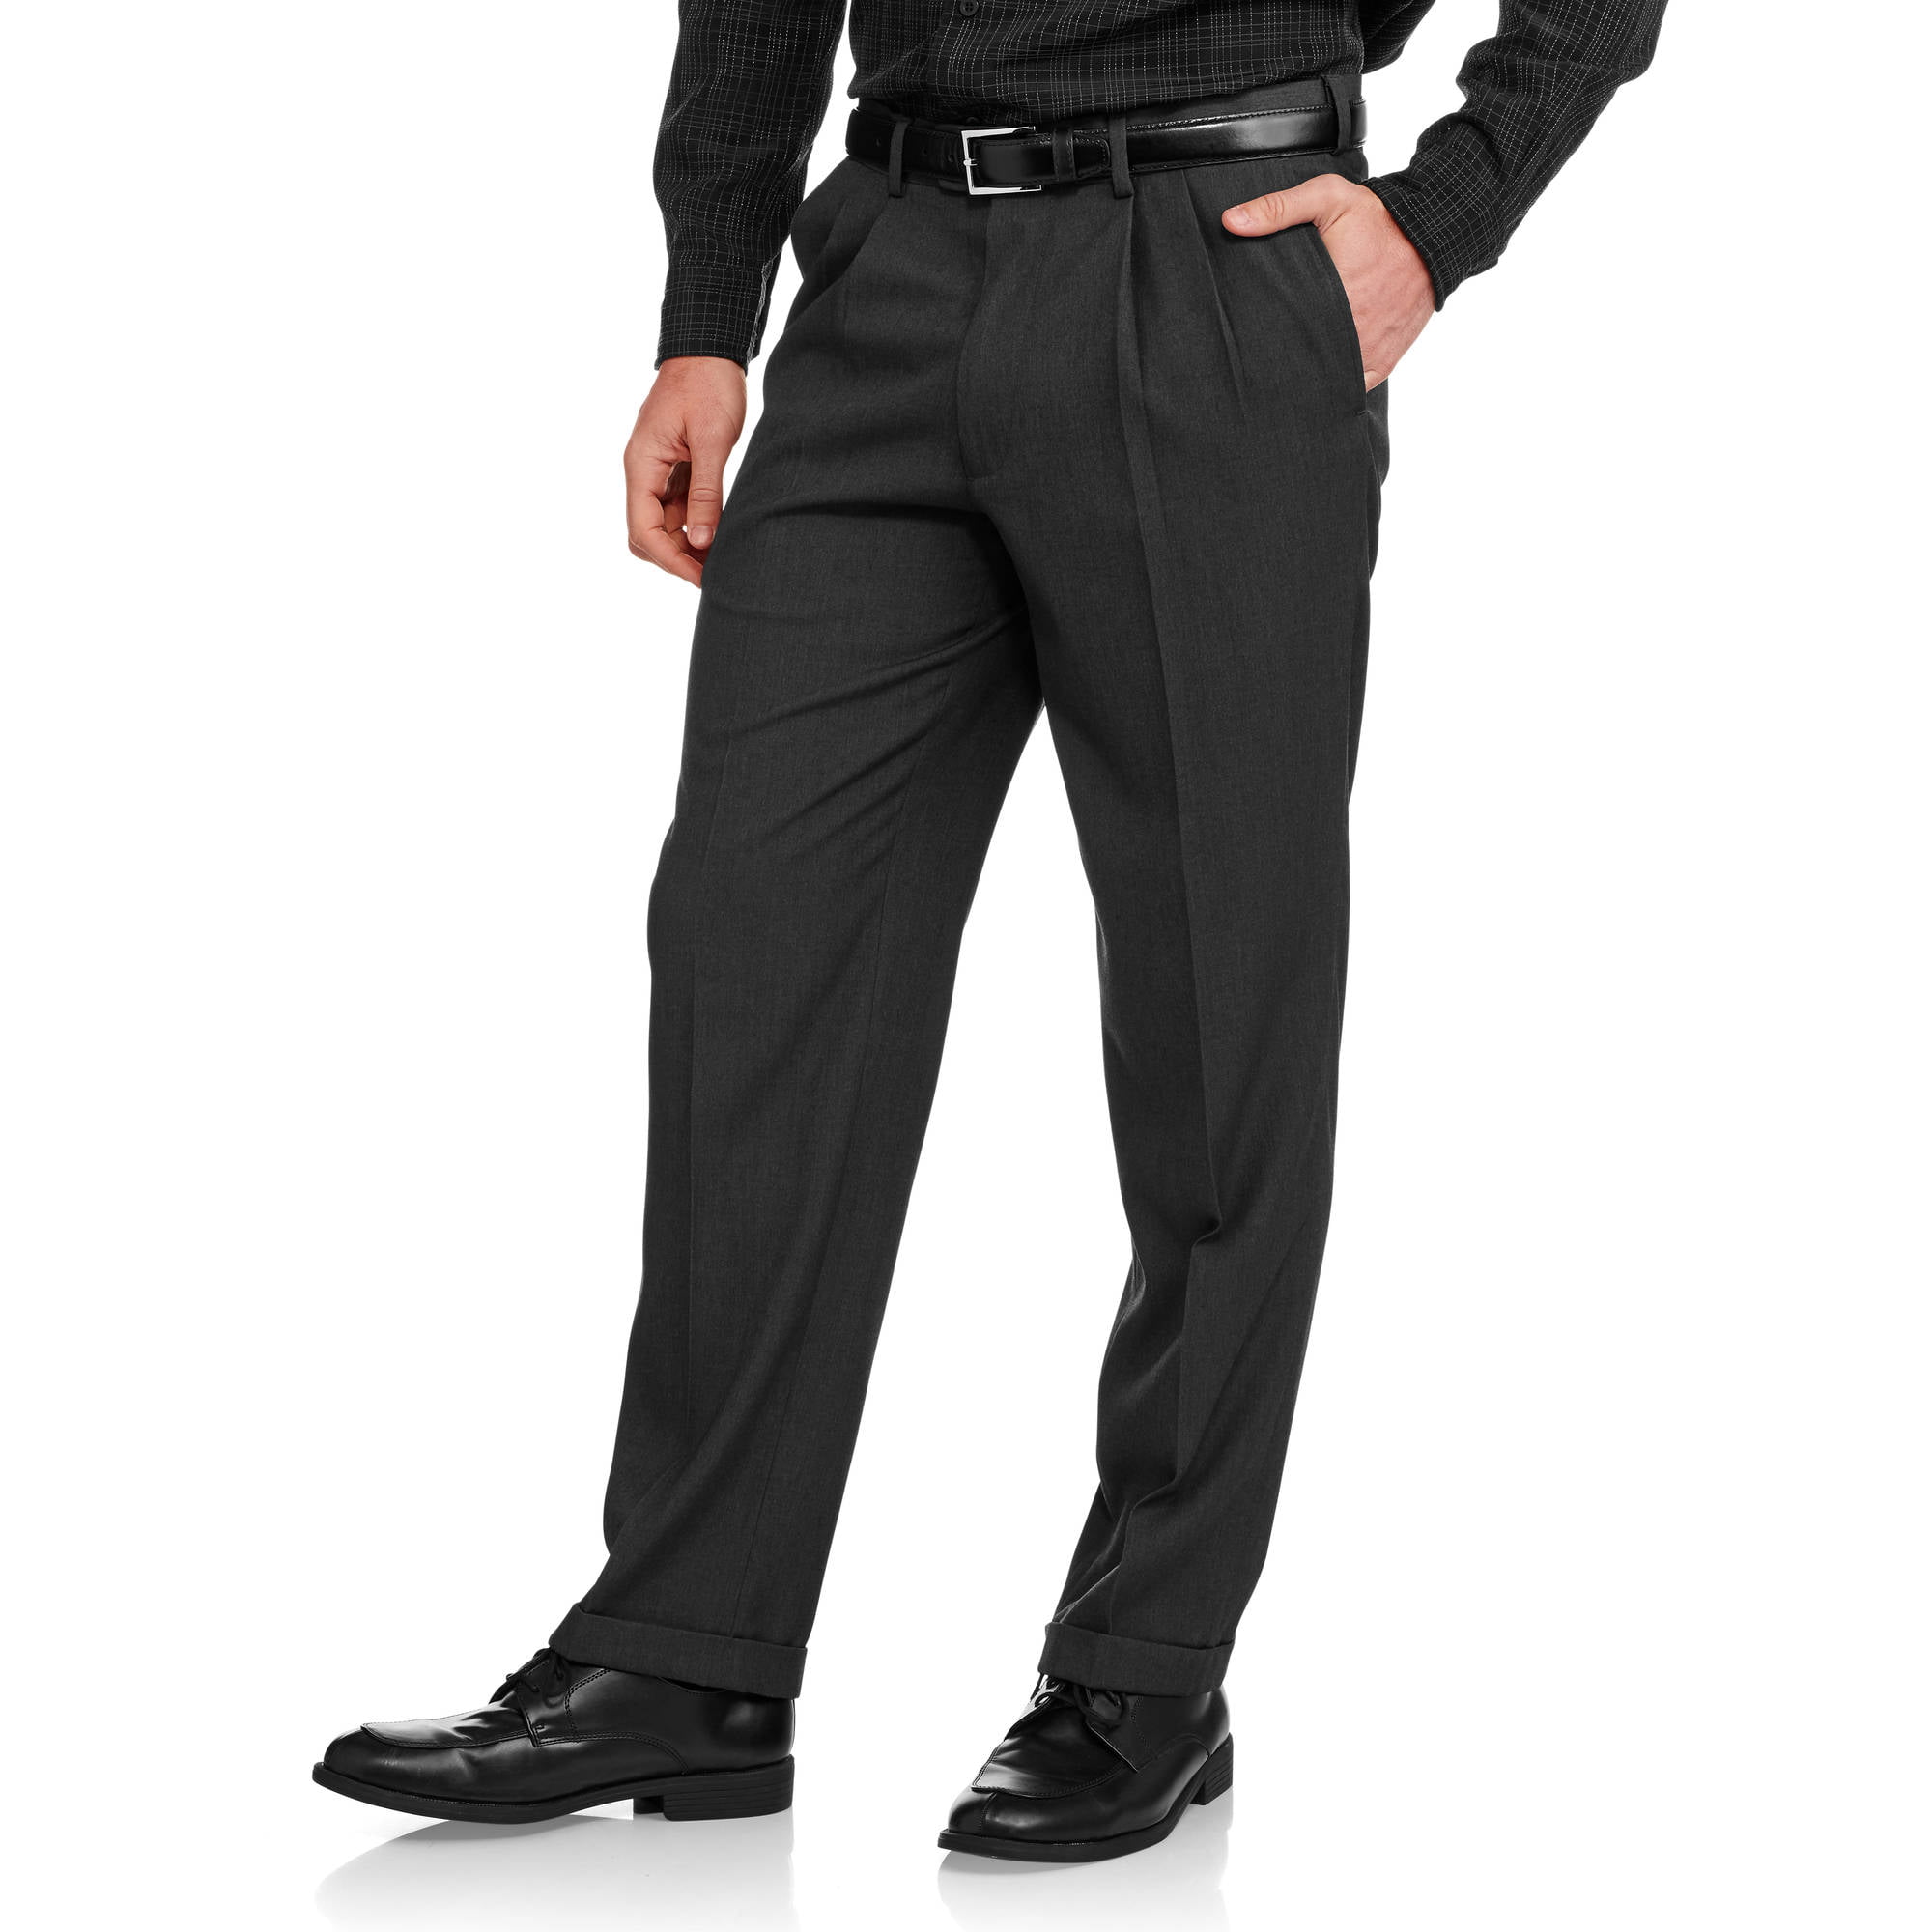 Men's Pleated Dress Pant - Walmart.com